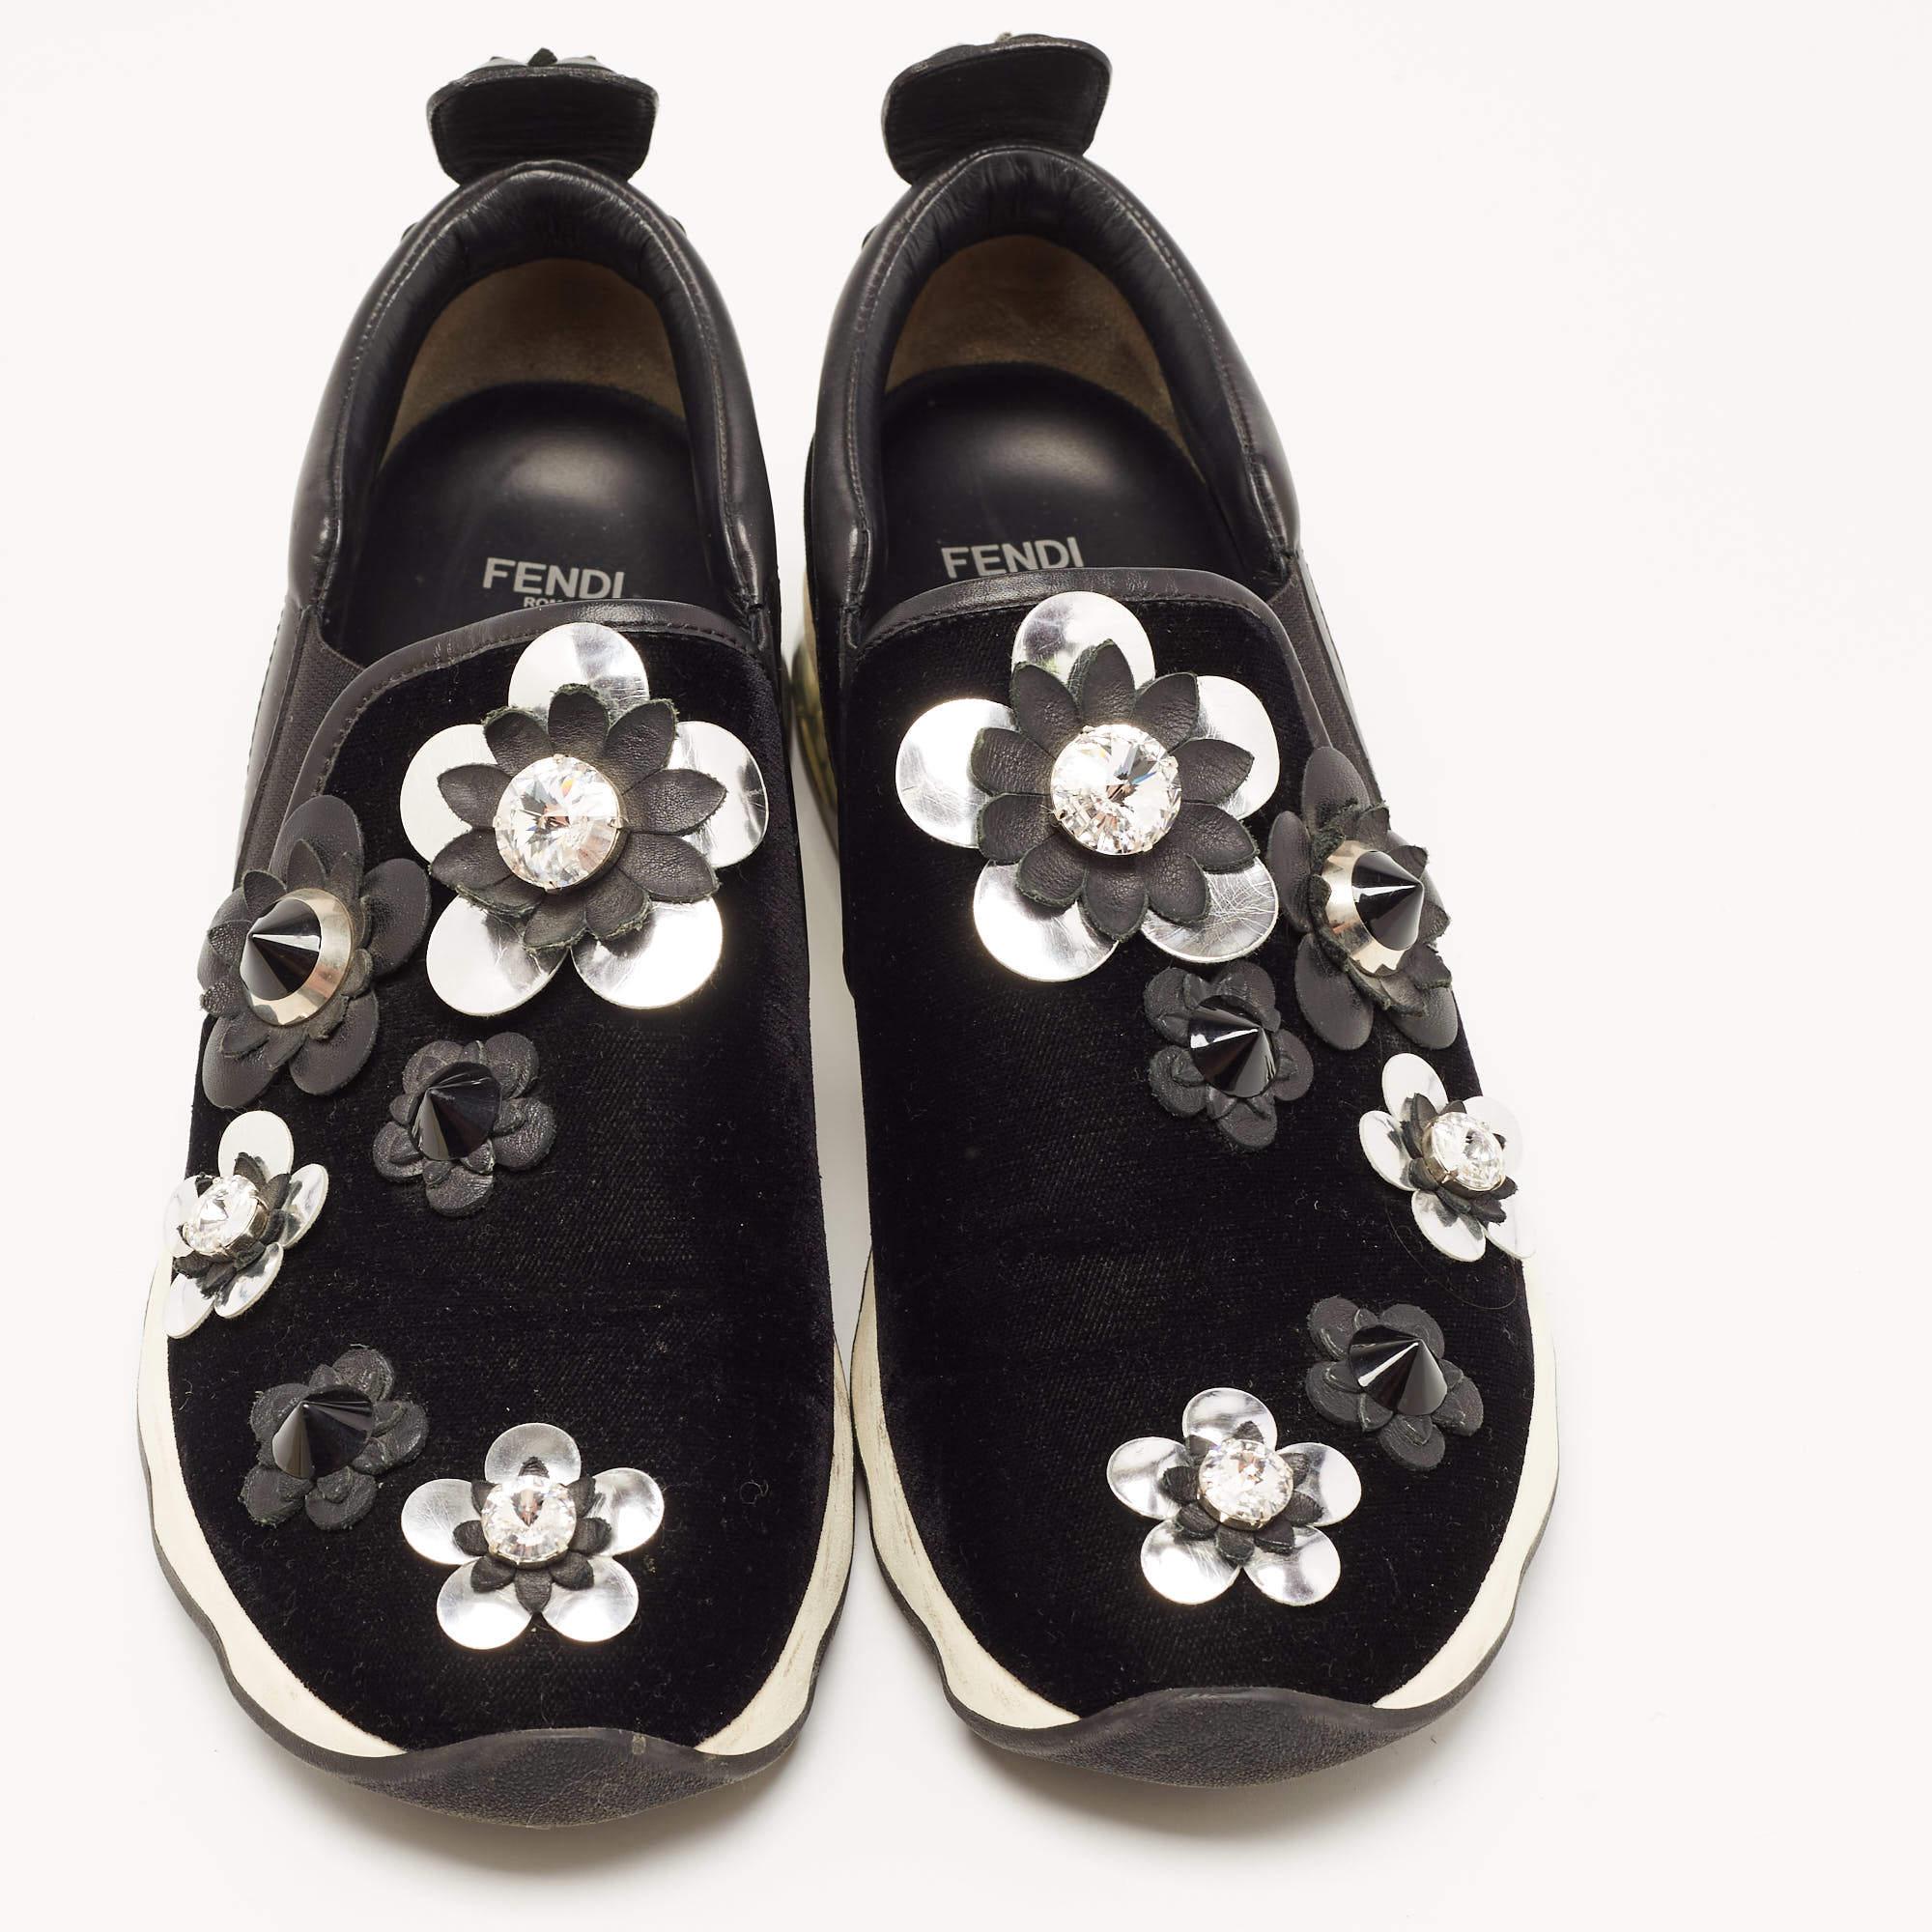 Fendi Black Velvet and Leather Flowerland Slip On Sneakers Size 39 In Good Condition For Sale In Dubai, Al Qouz 2